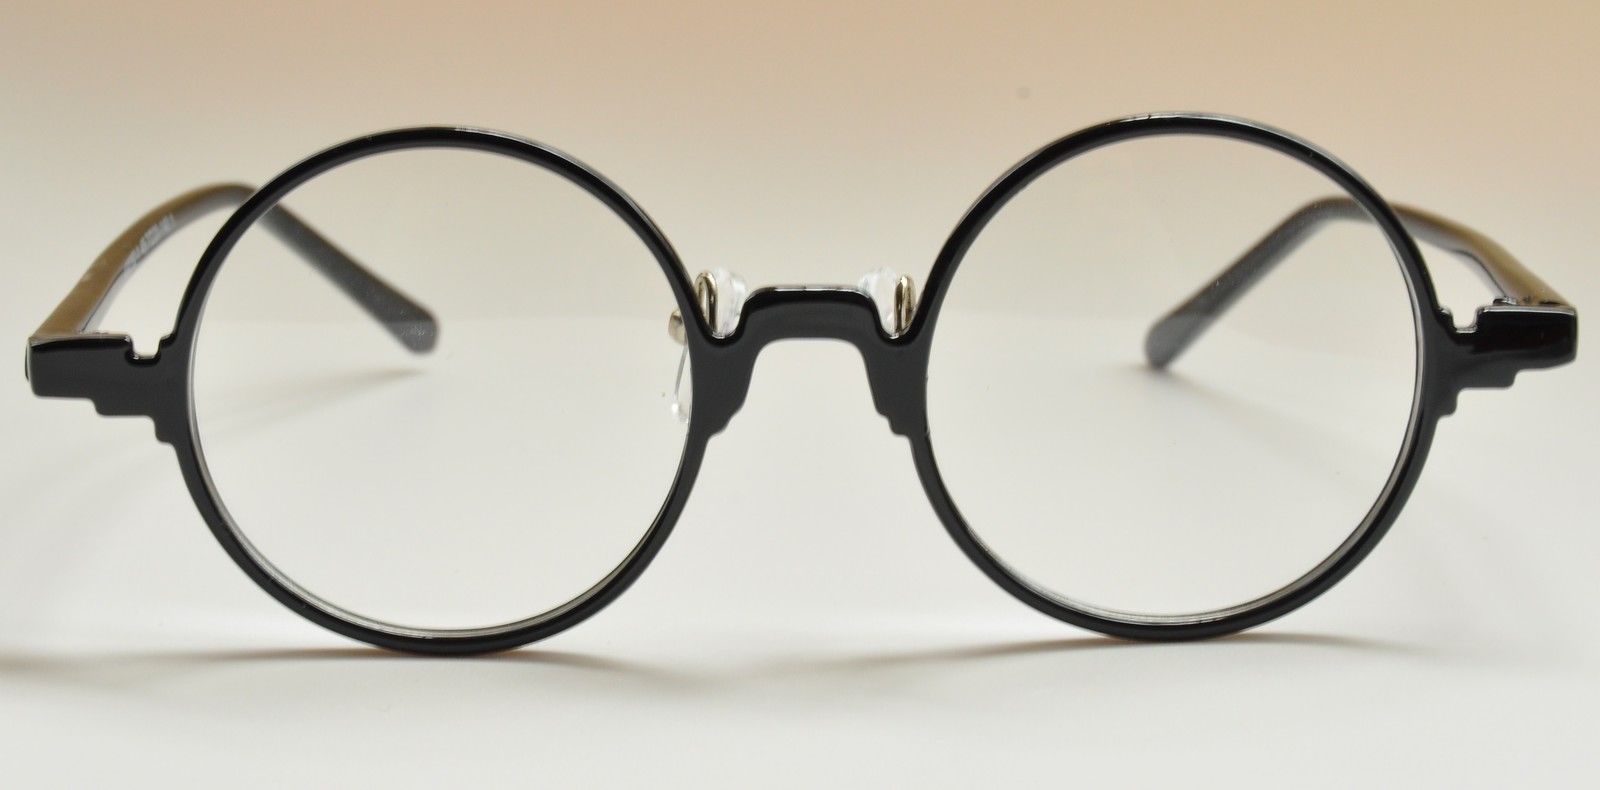 Vintage Round Eyeglass Frames Retro Spectacles Eyewear Rx Tortoise Shell Black Other Vision Care